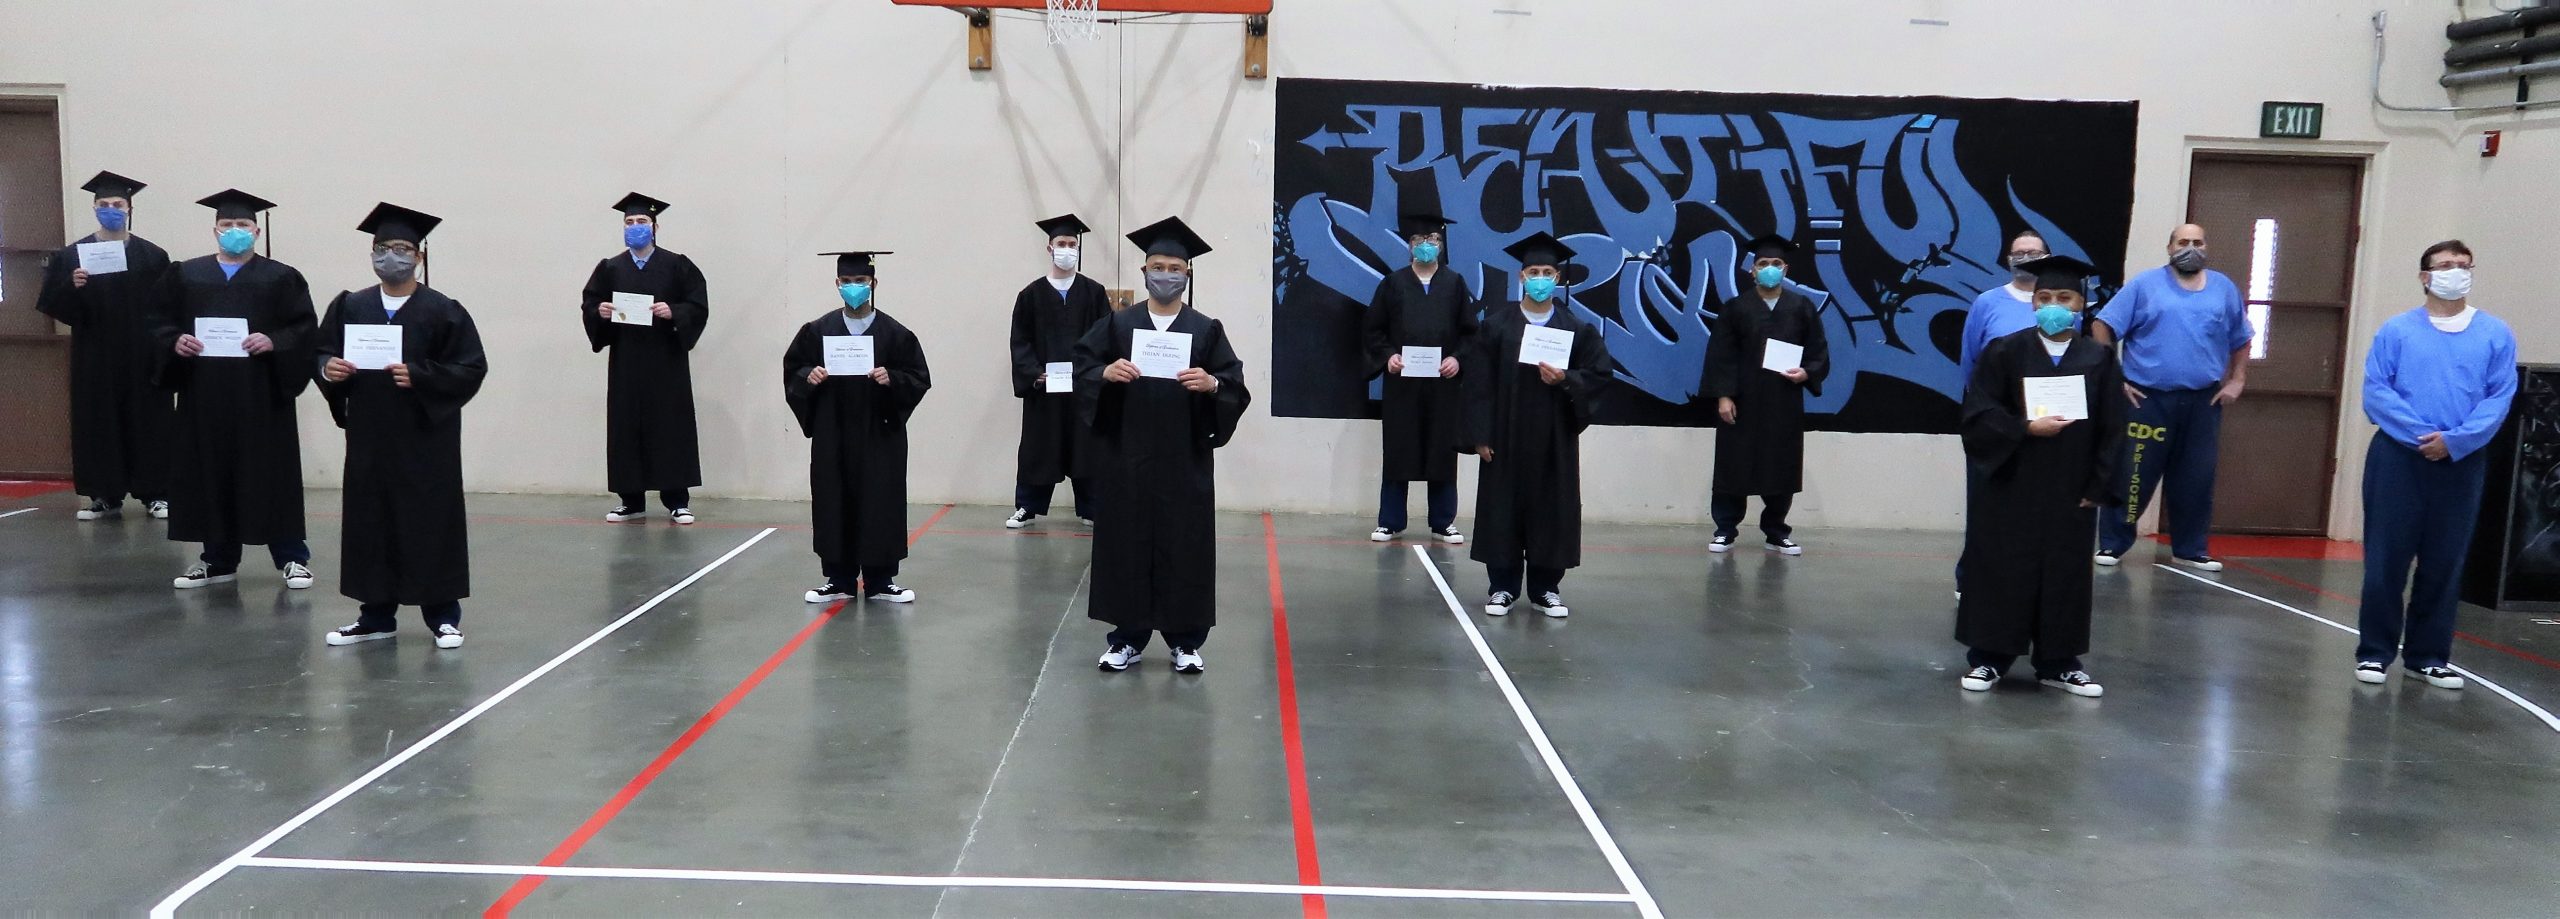 ASP incarcerated students hold high school diplomas.